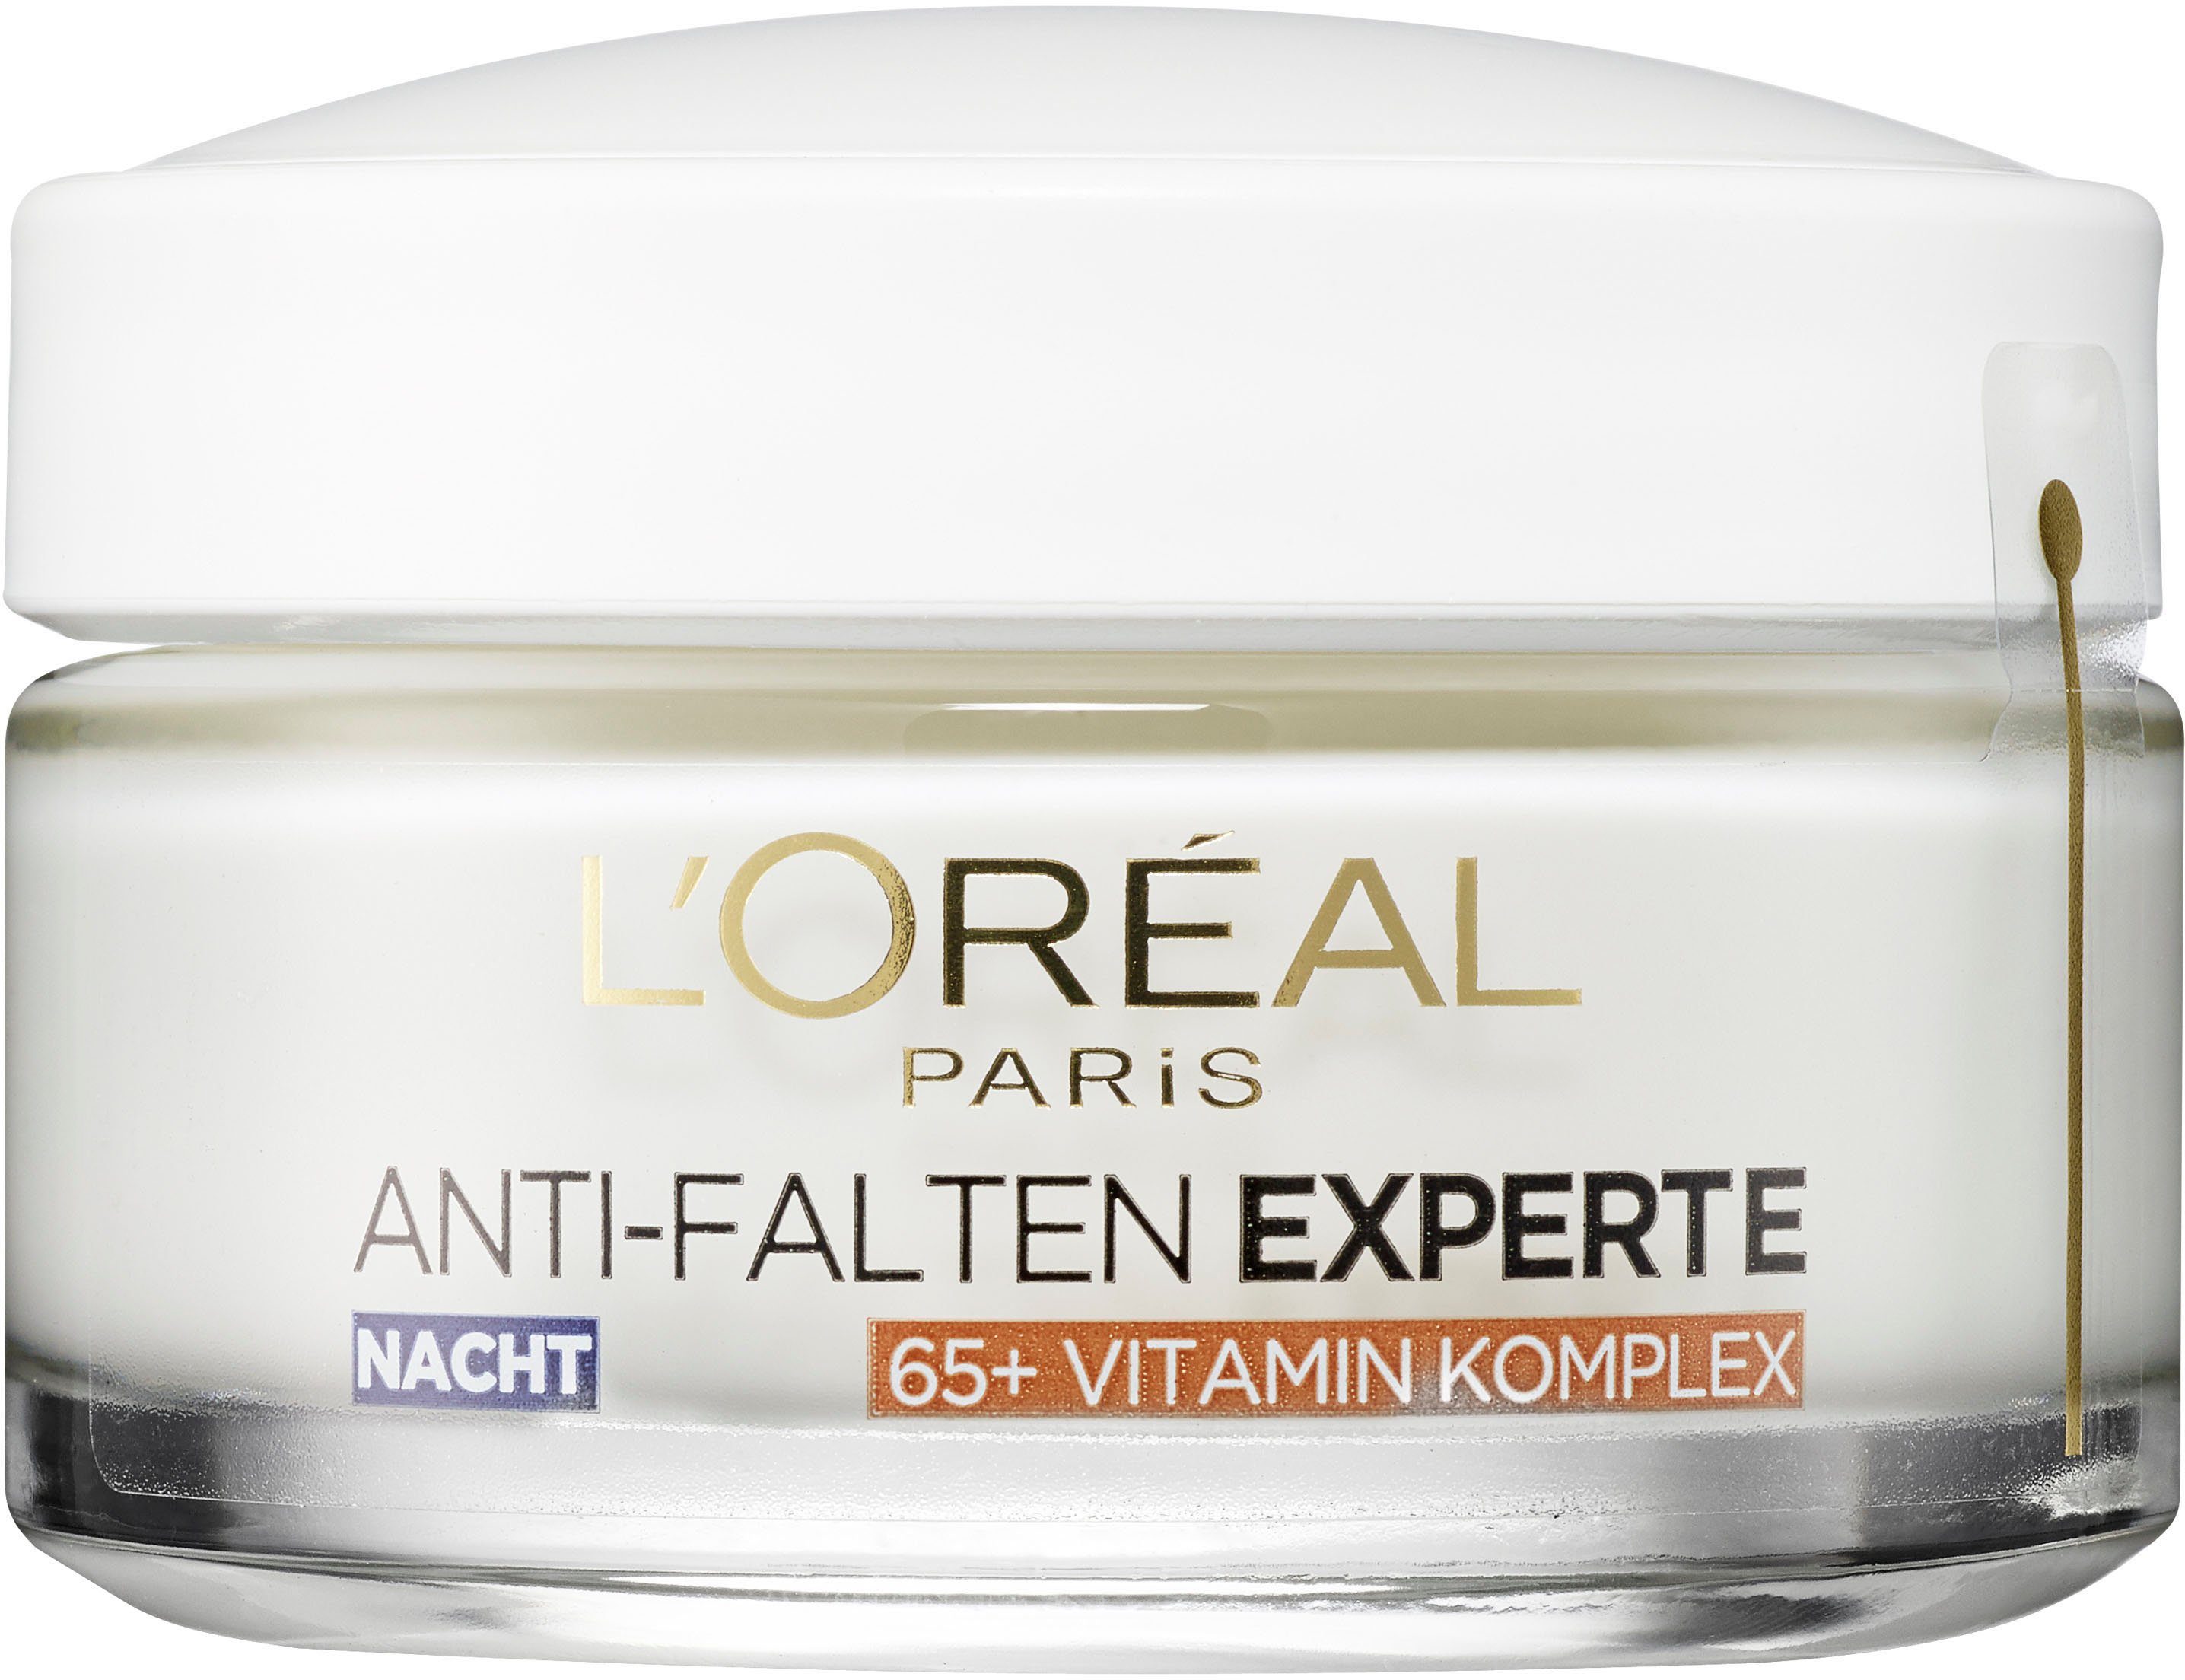 PARIS Haut Anti-Aging-Creme L'ORÉAL Nacht 65+ Anti-Falten für Experte Feuchtigkeitspflege